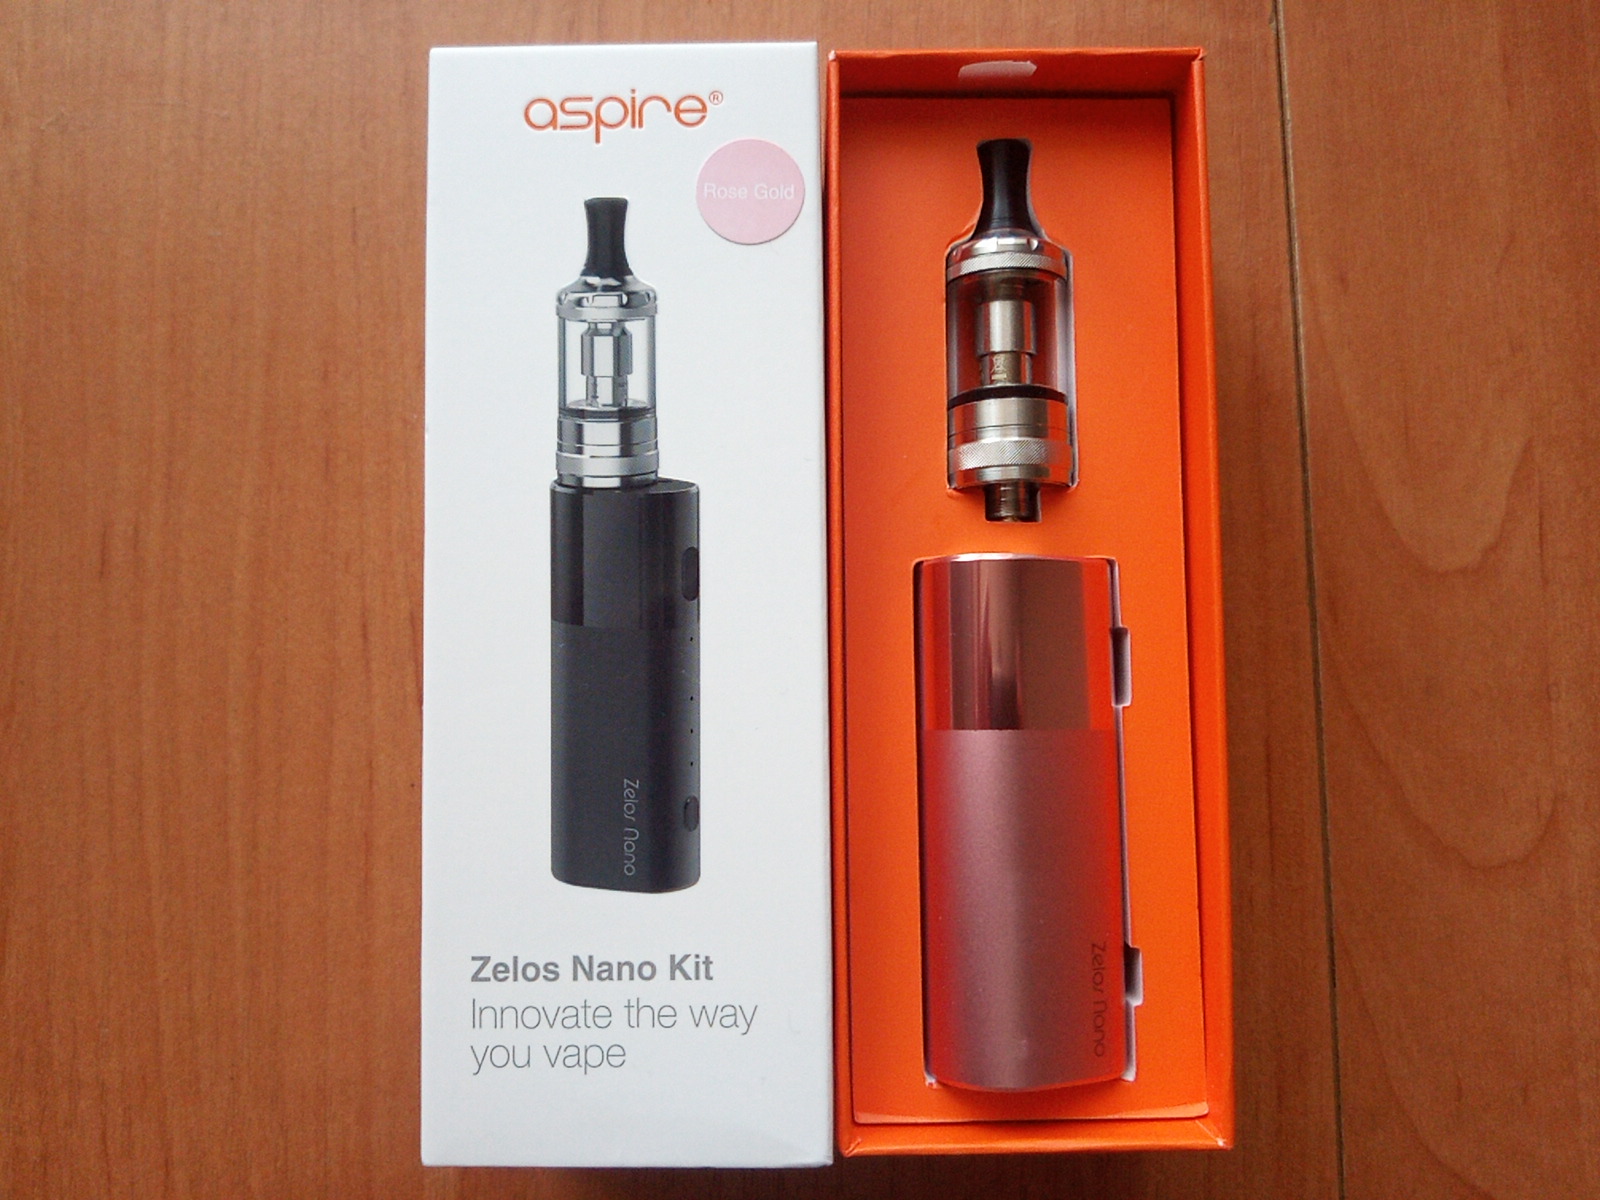 Zelos Nano Kit by Aspire reviewed by Dreamvaper | E-Cigarette Forum